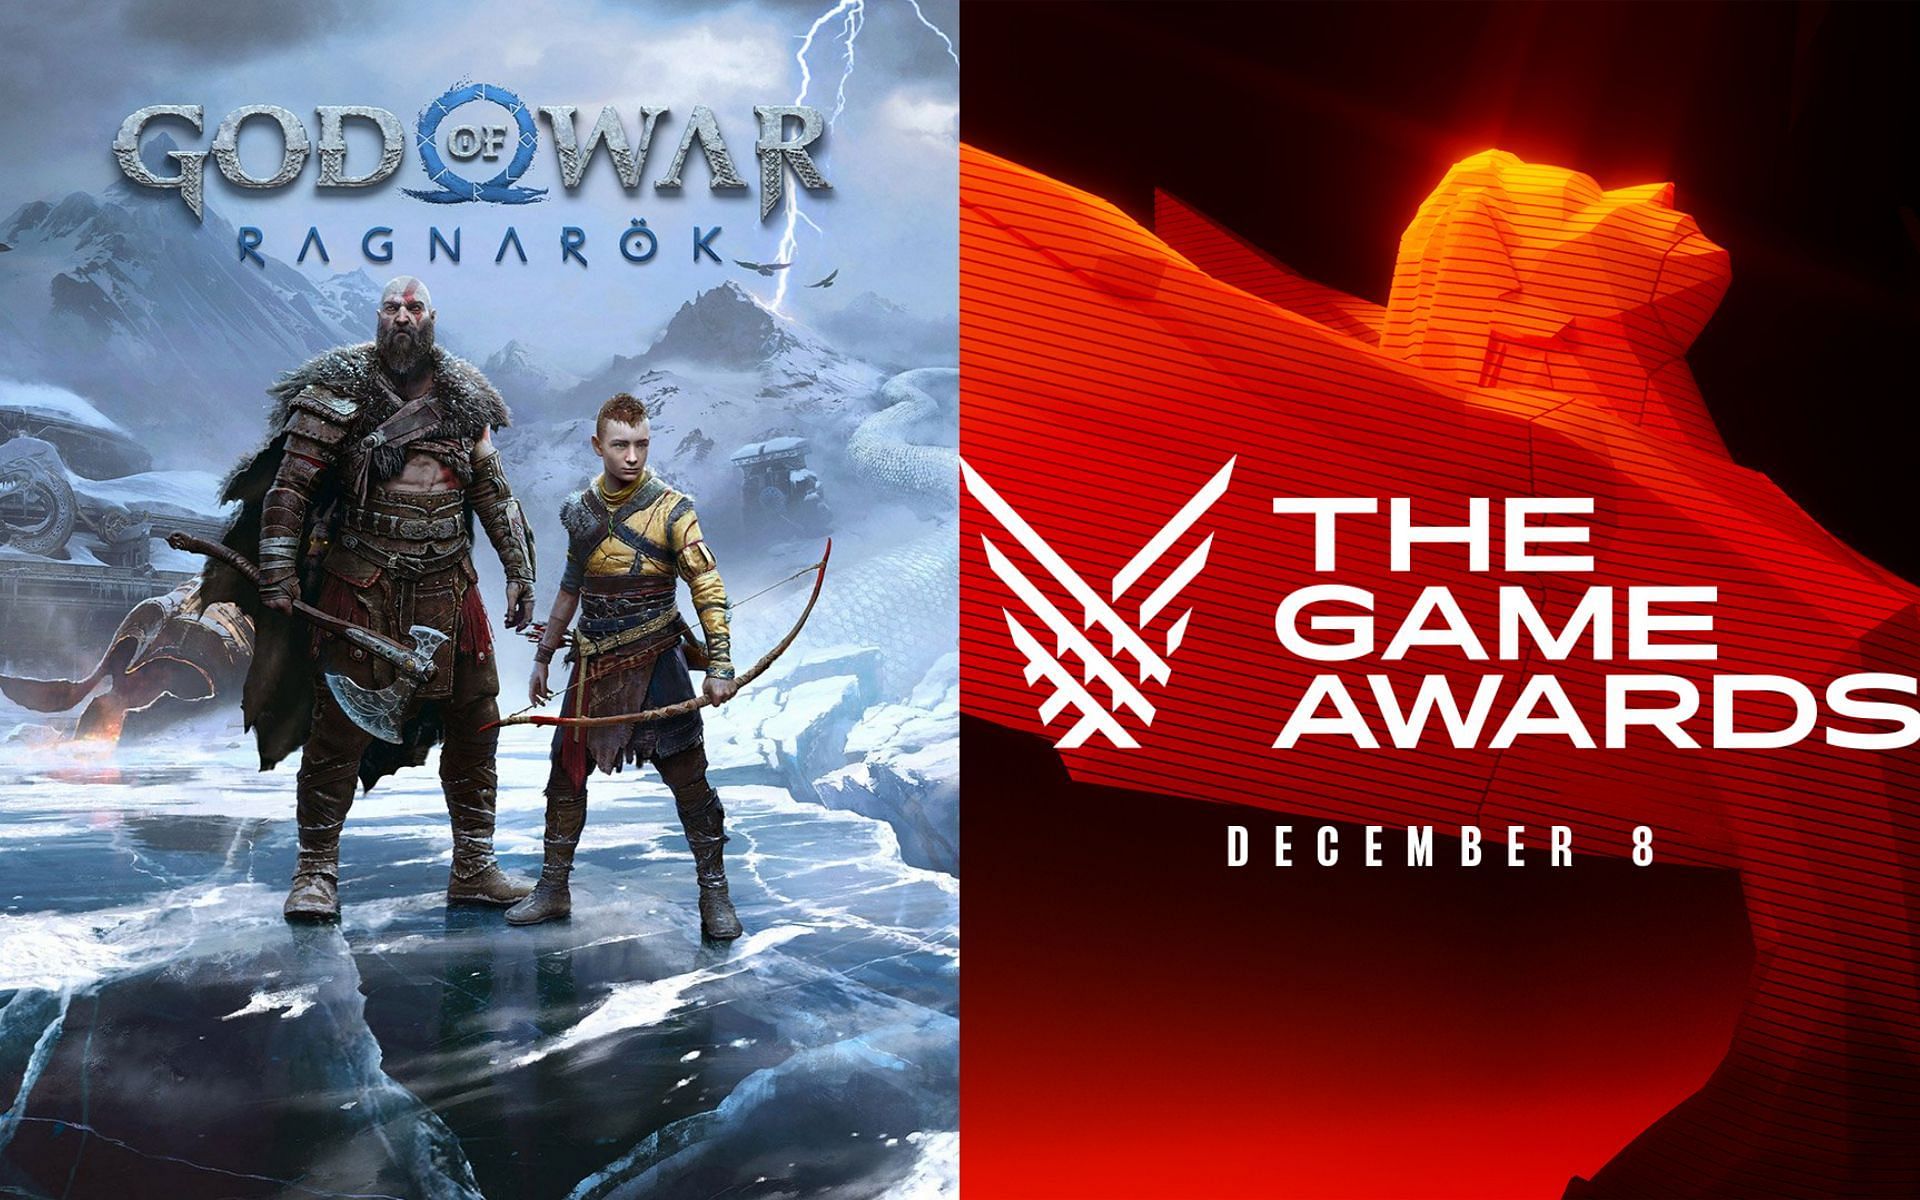 God of War Ragnarok nominated across multiple categories at The